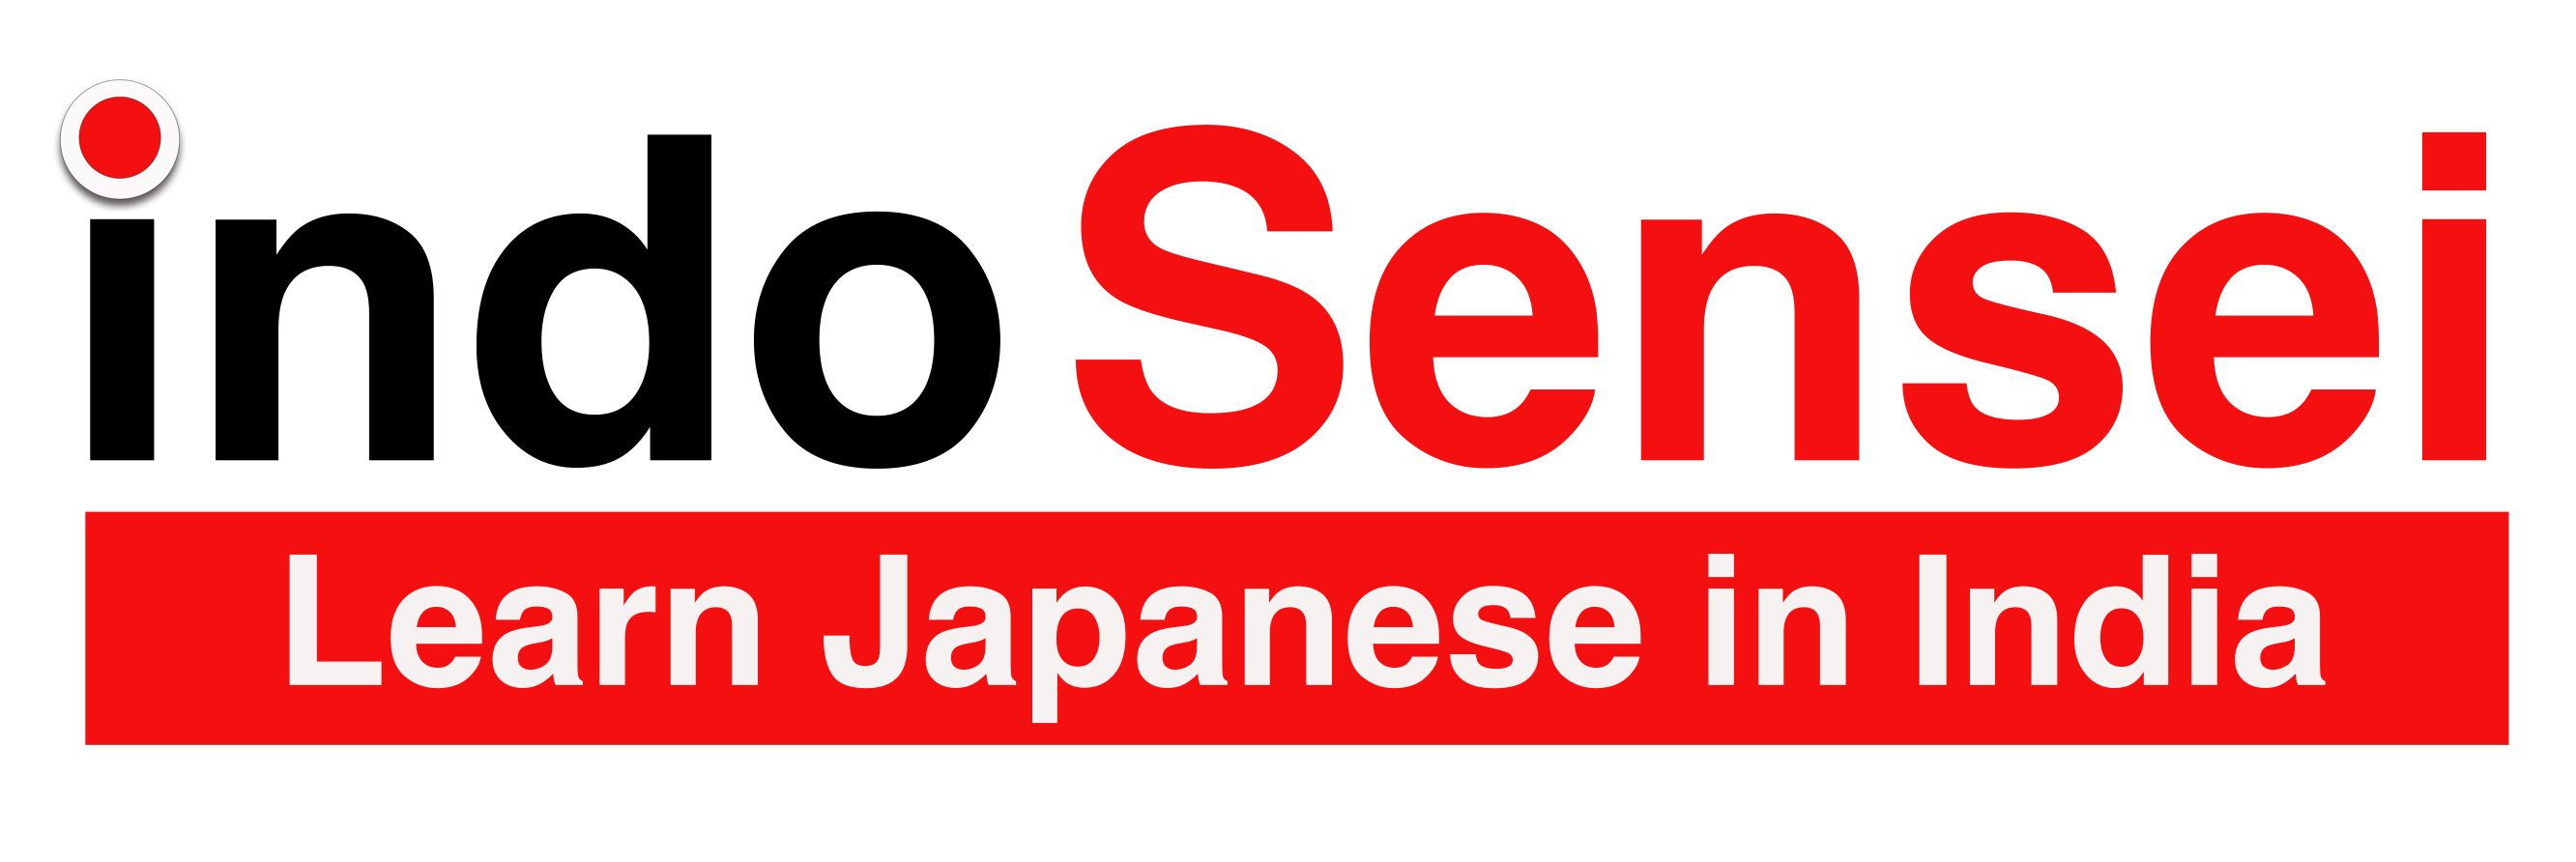 Indosensei Online Live Japanese Classes in Hindi & English